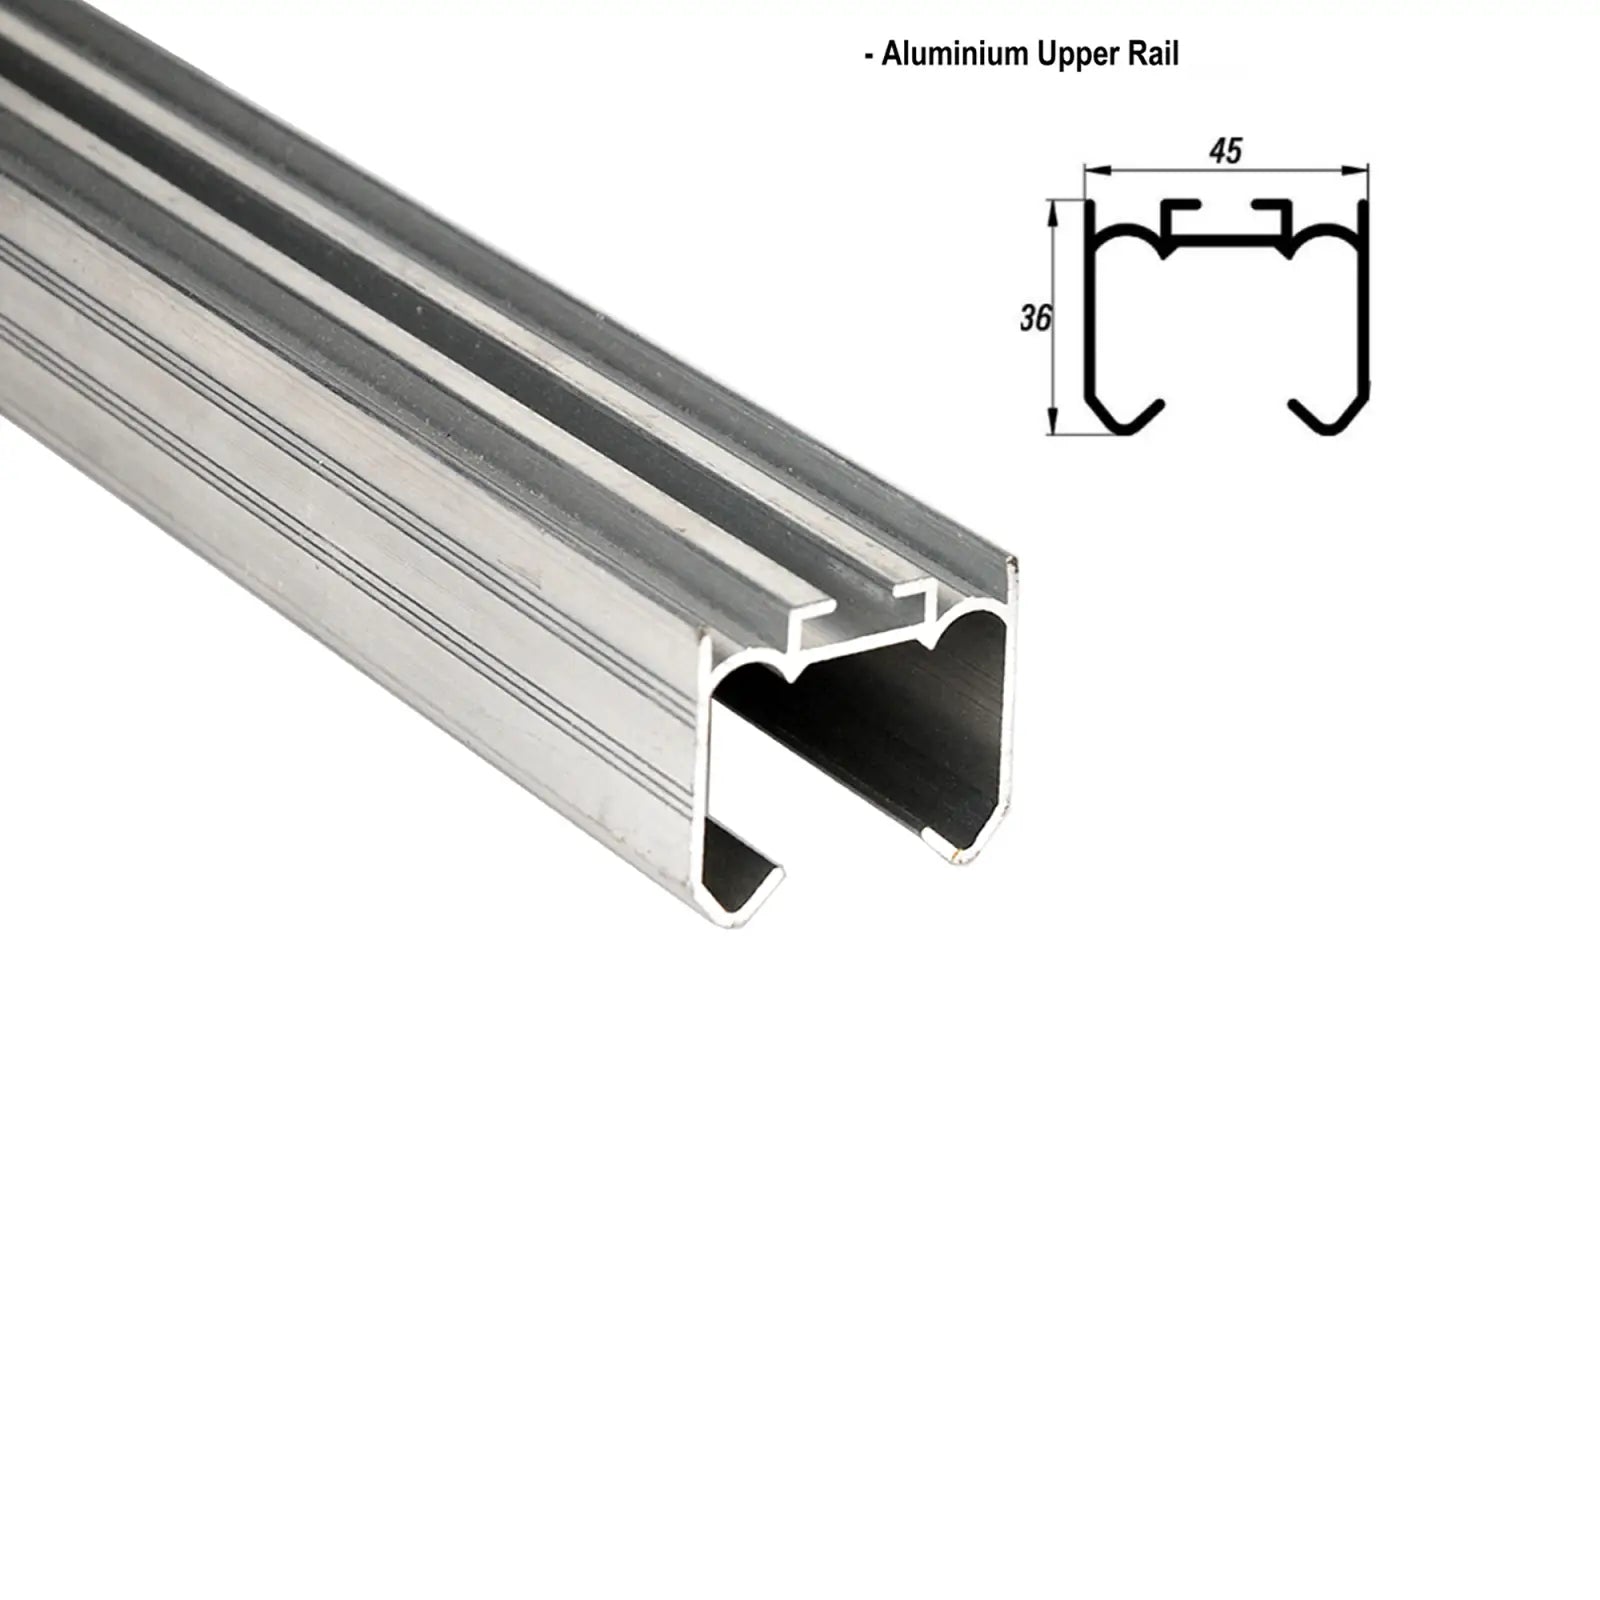 X-Slide Top Hung Sliding Door Kit - 1200mm Track - Decor And Decor